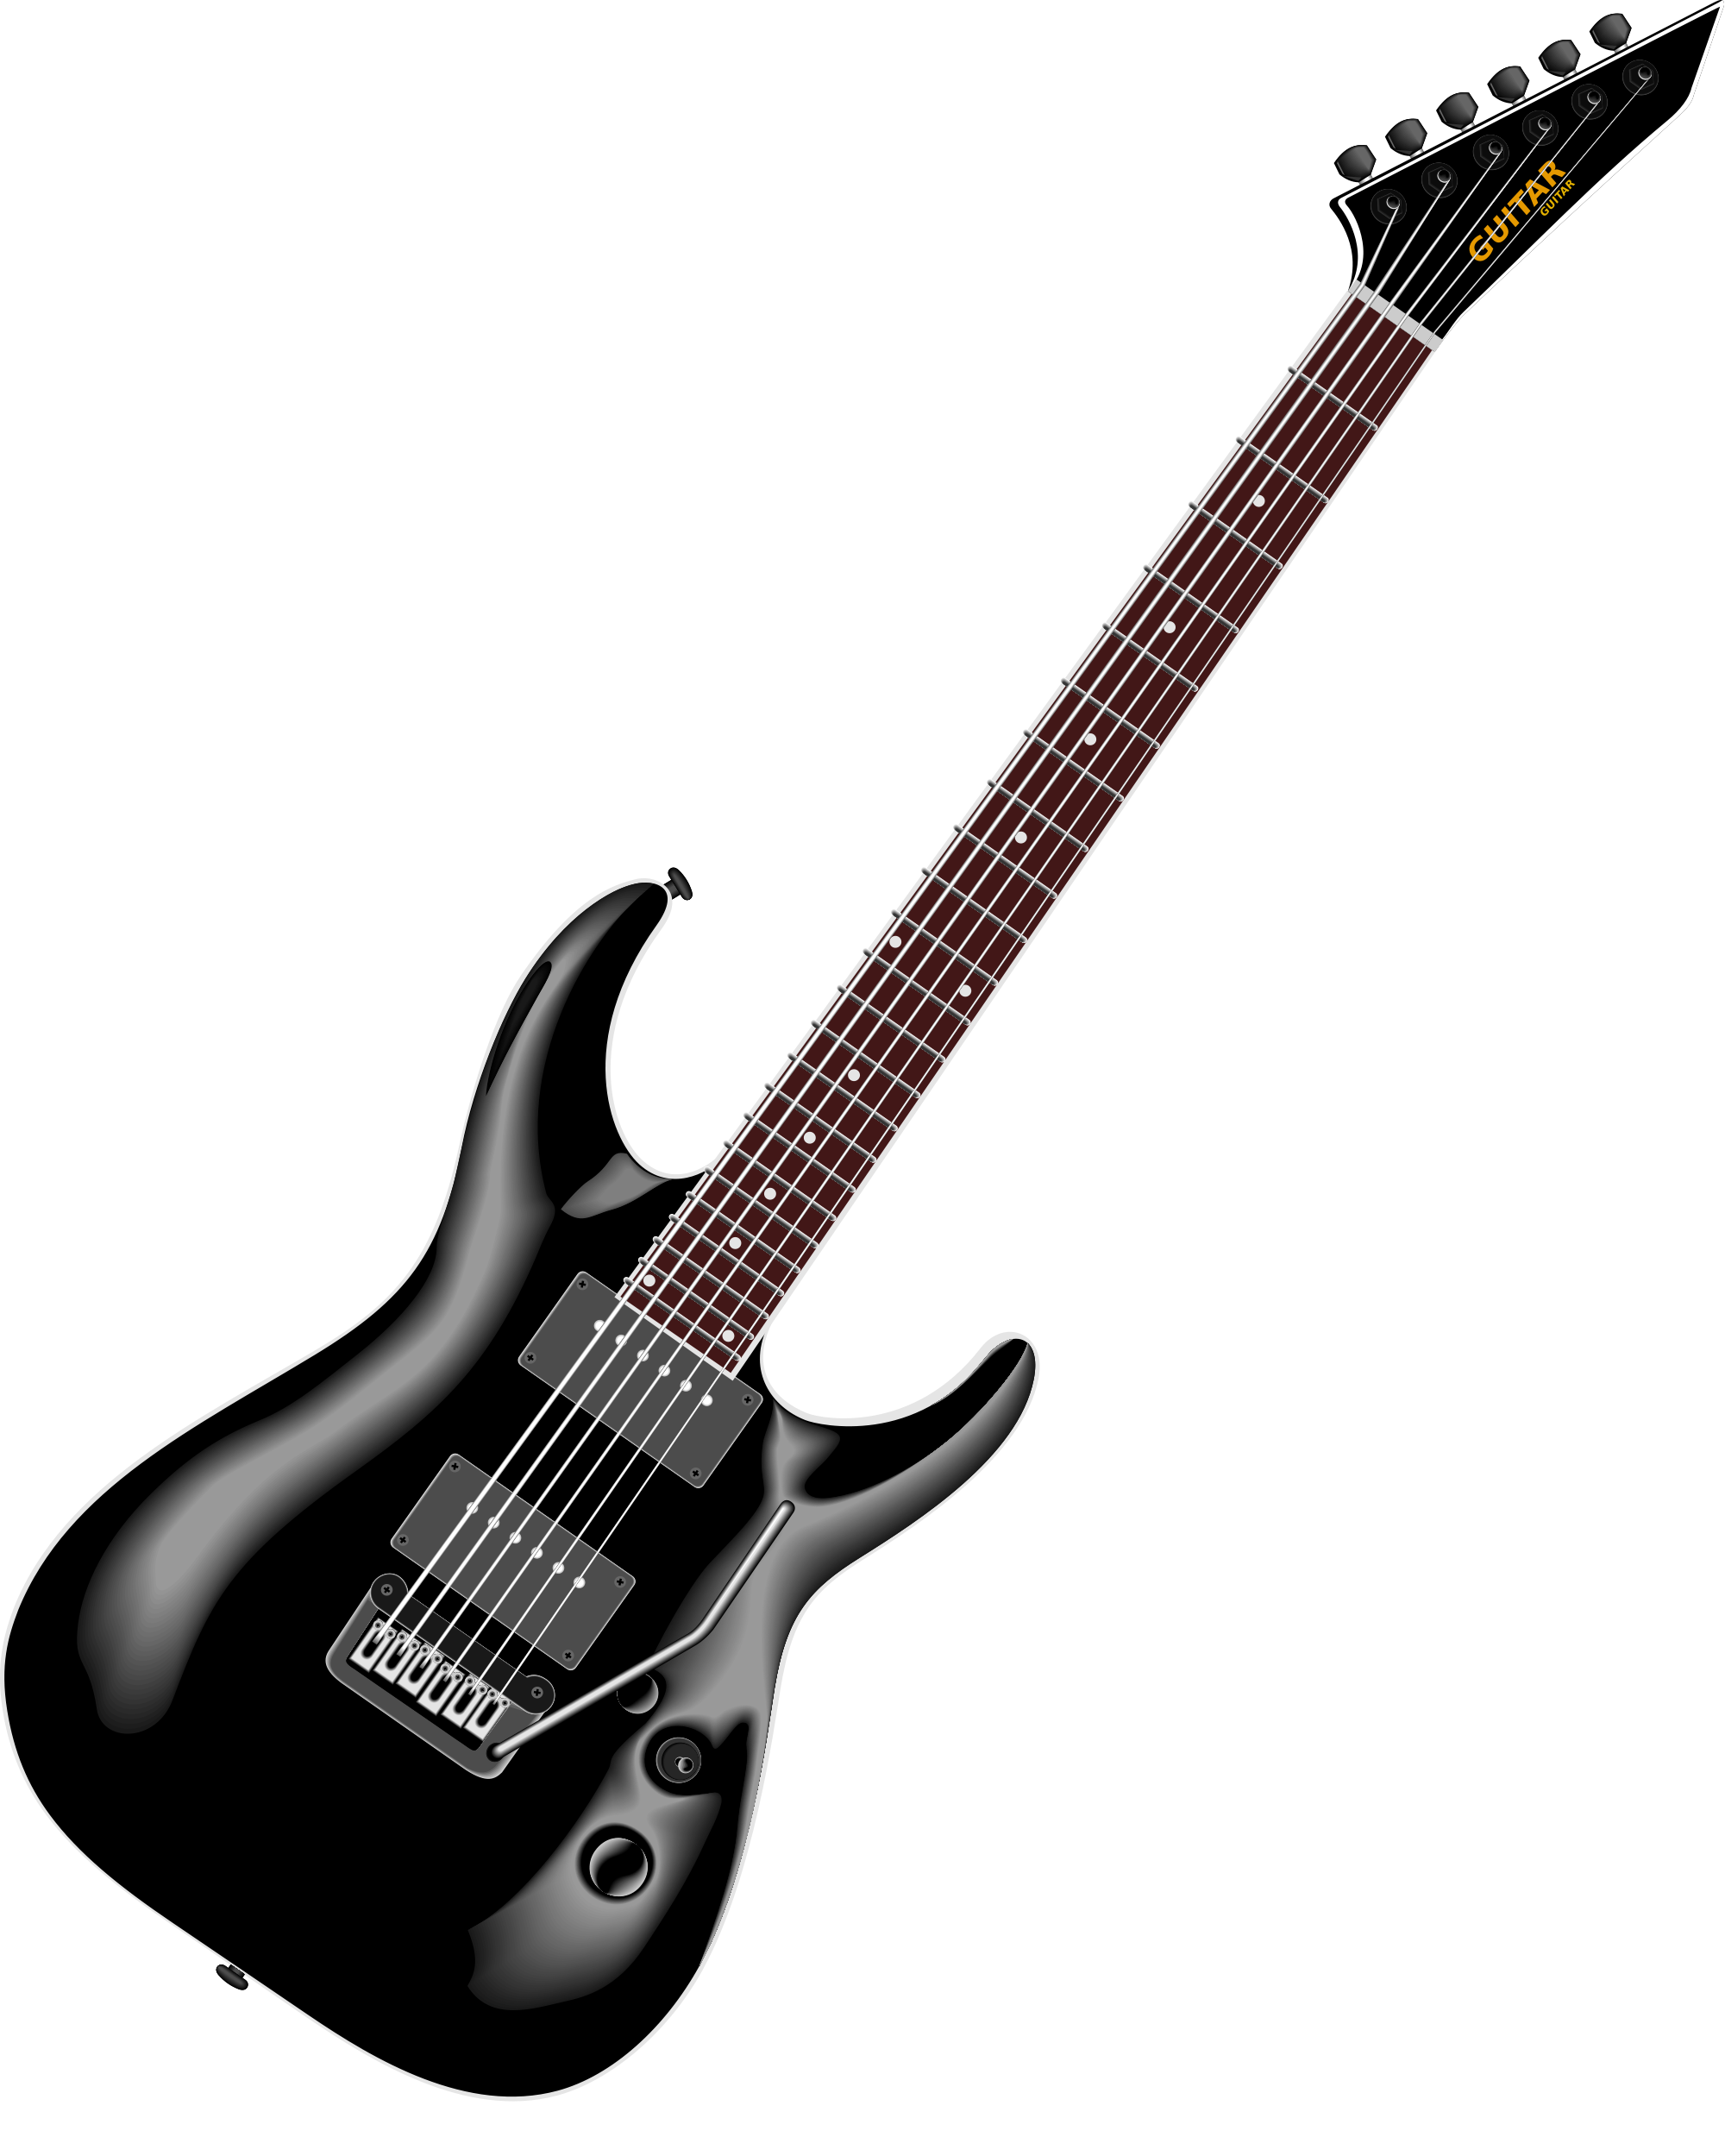 Black Rock Гитара PNG Image